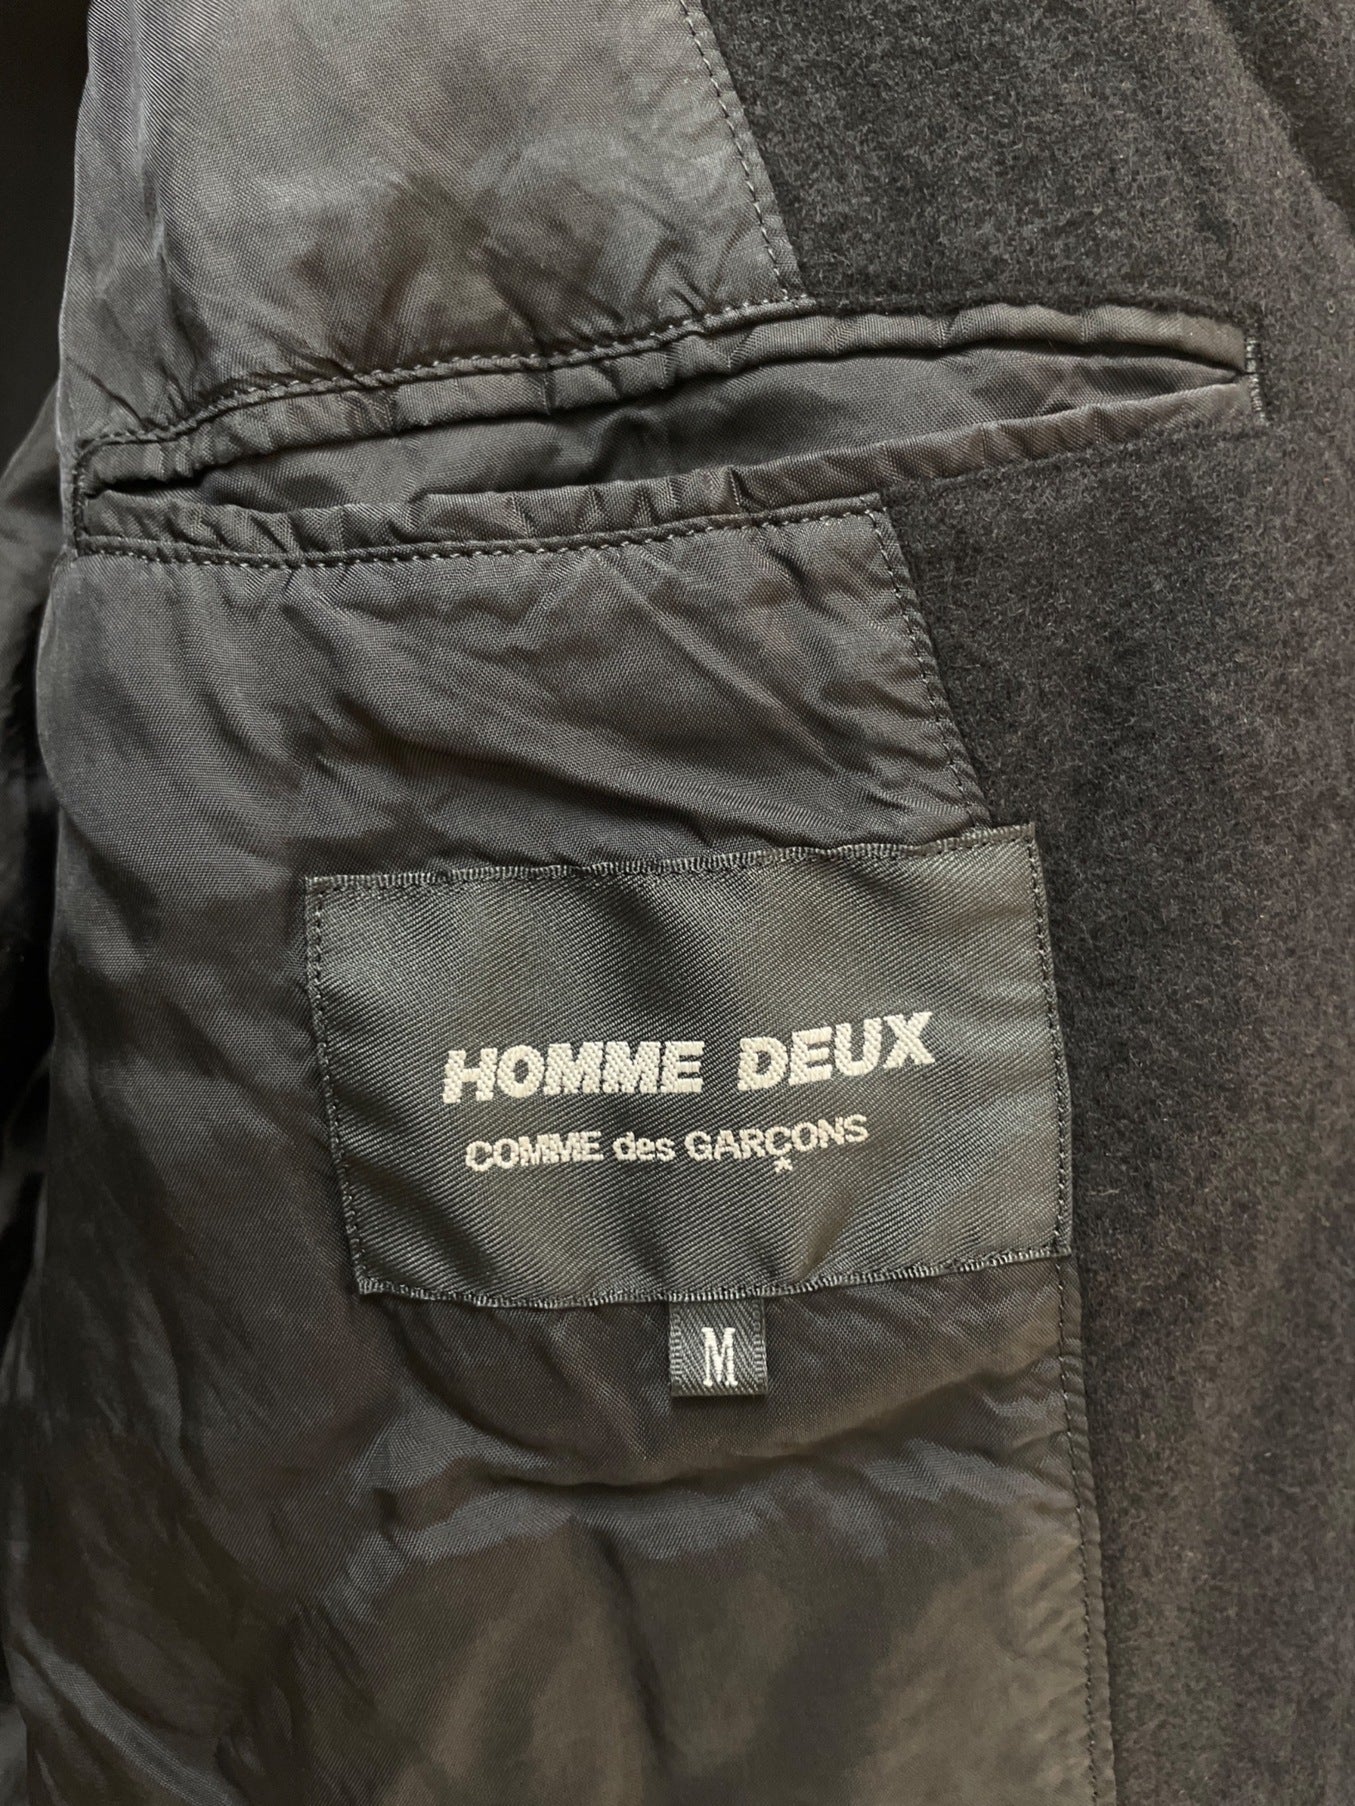 Comme des Garcons Homme Deux 양모 제품 완성 된 재킷 DD-J050